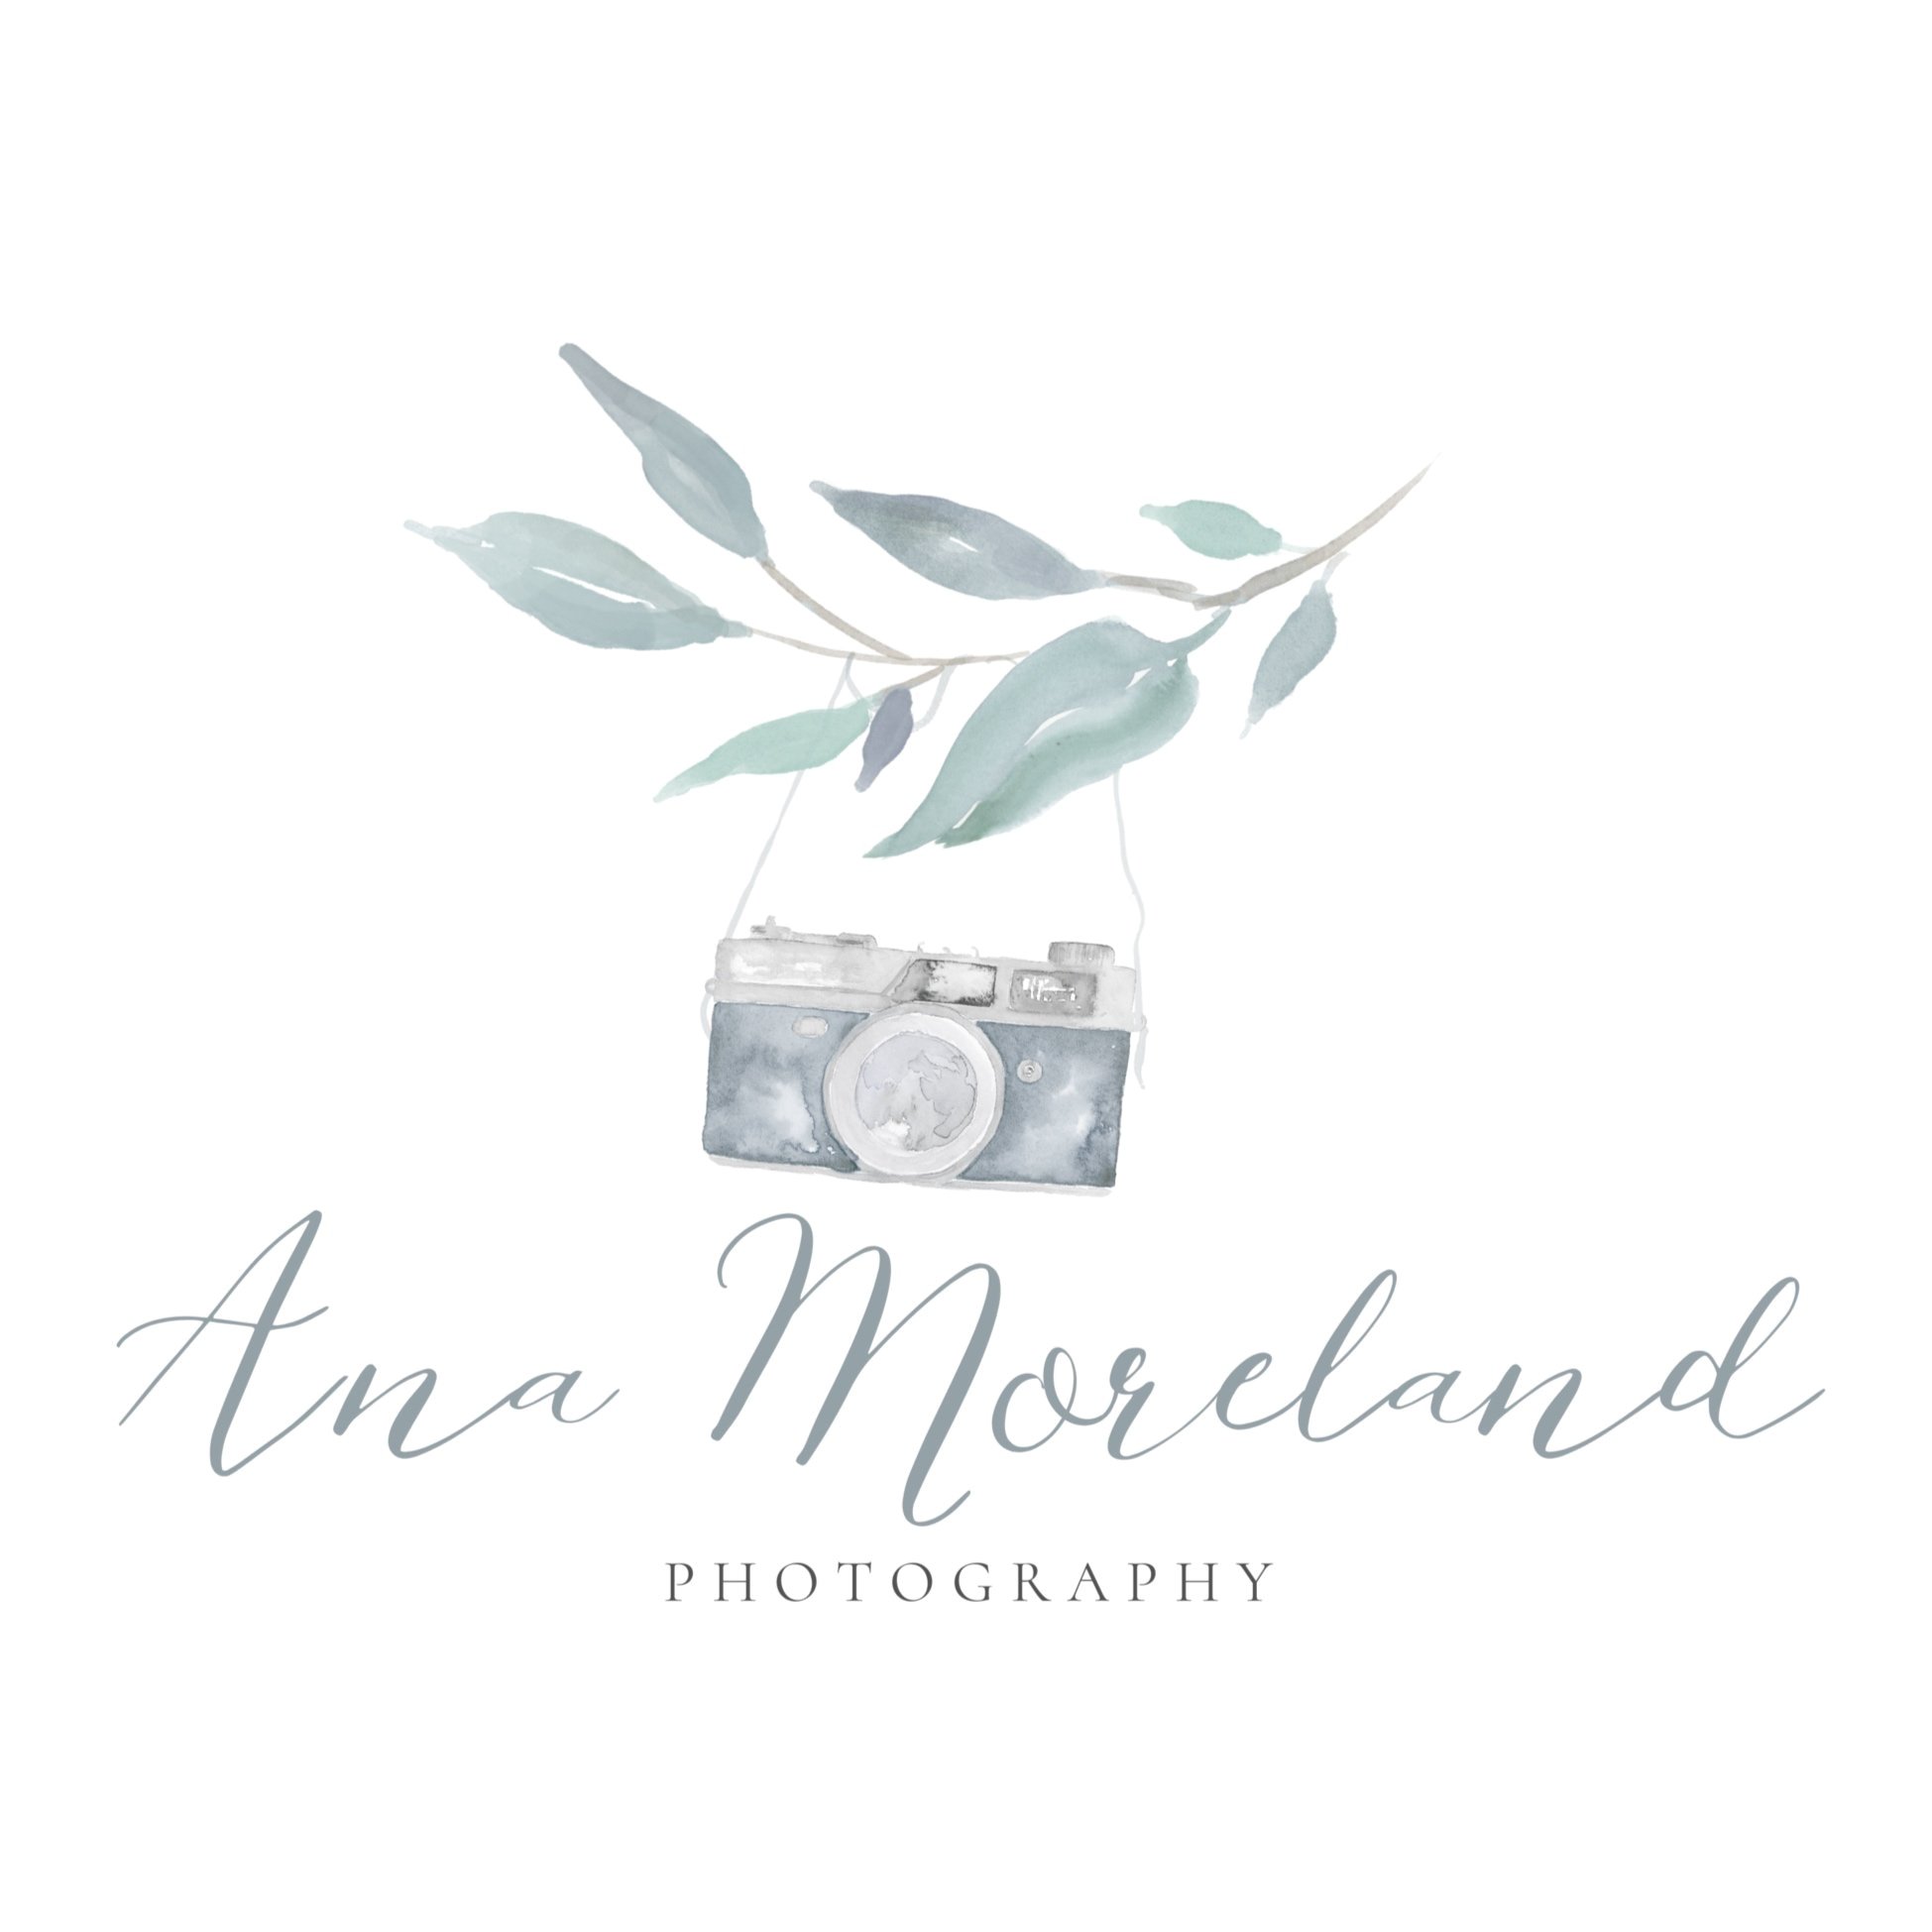 Ana Moreland Photography